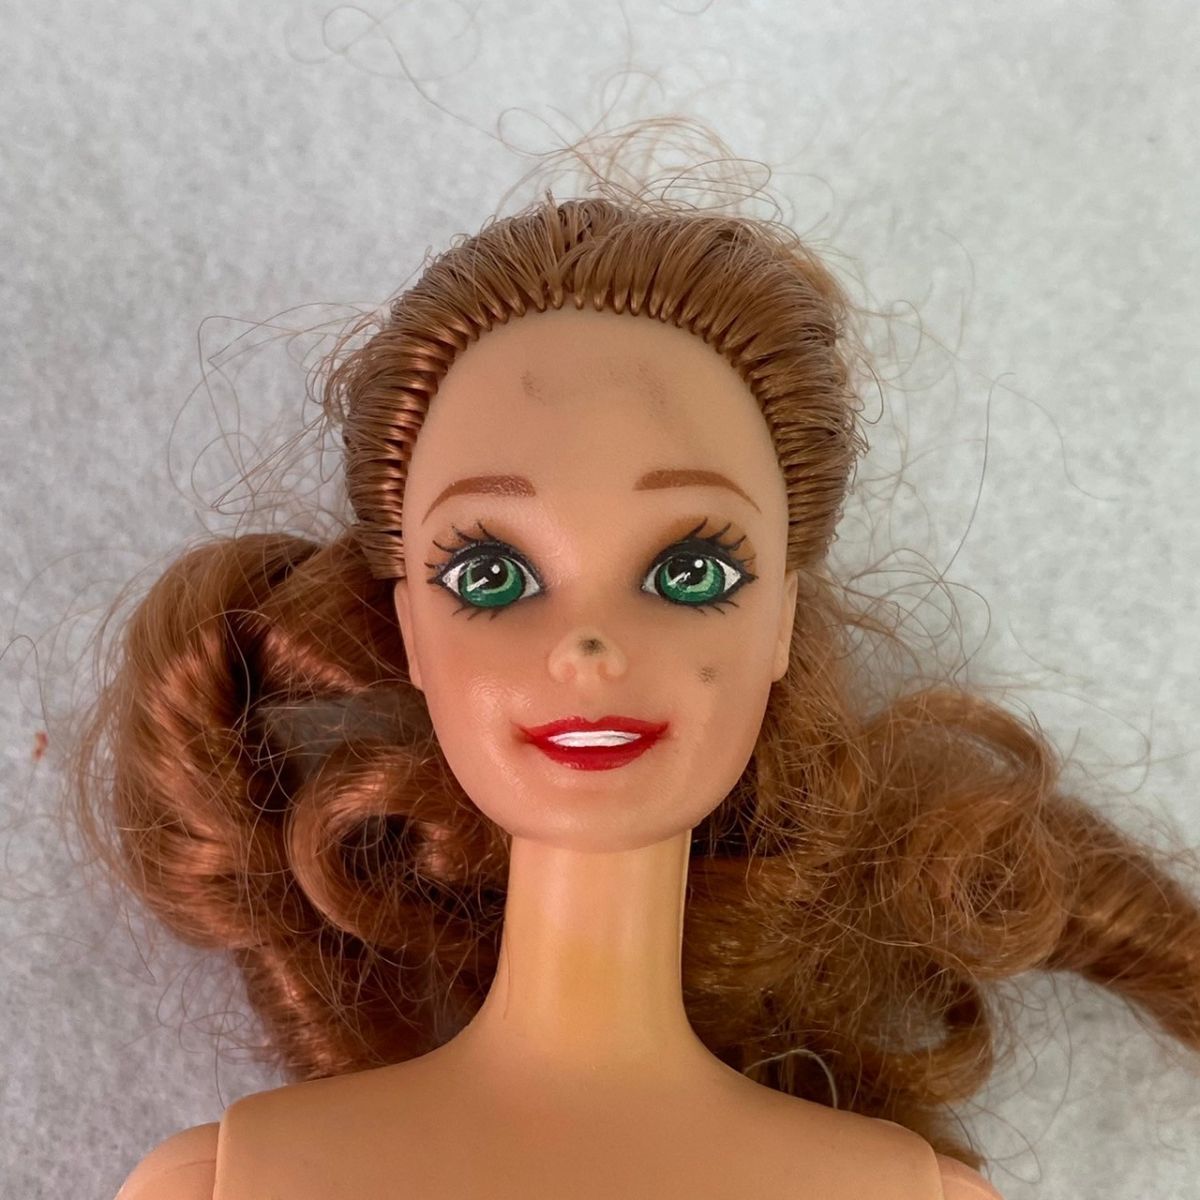 W324-C4-1275 マテル PIONEER Barbie パイオニアバービー AMERICAN STORIES COLLECTION アメリカンストーリーズコレクションドール 人形 ④_画像7